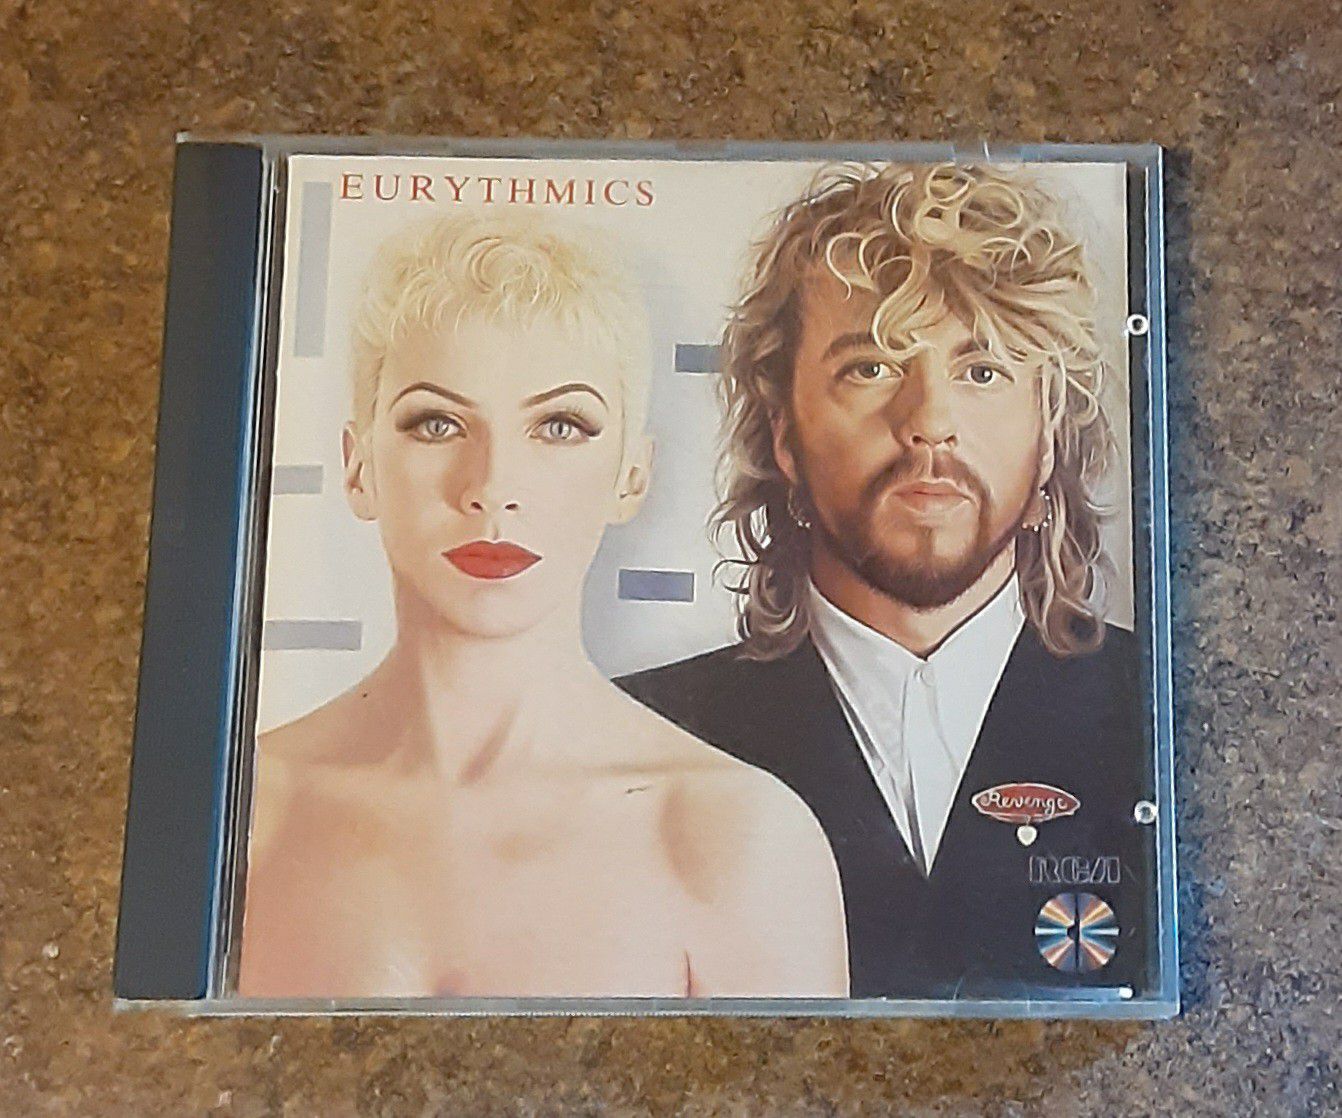 Eurythmics "Revenge" Compact Disc Music CD